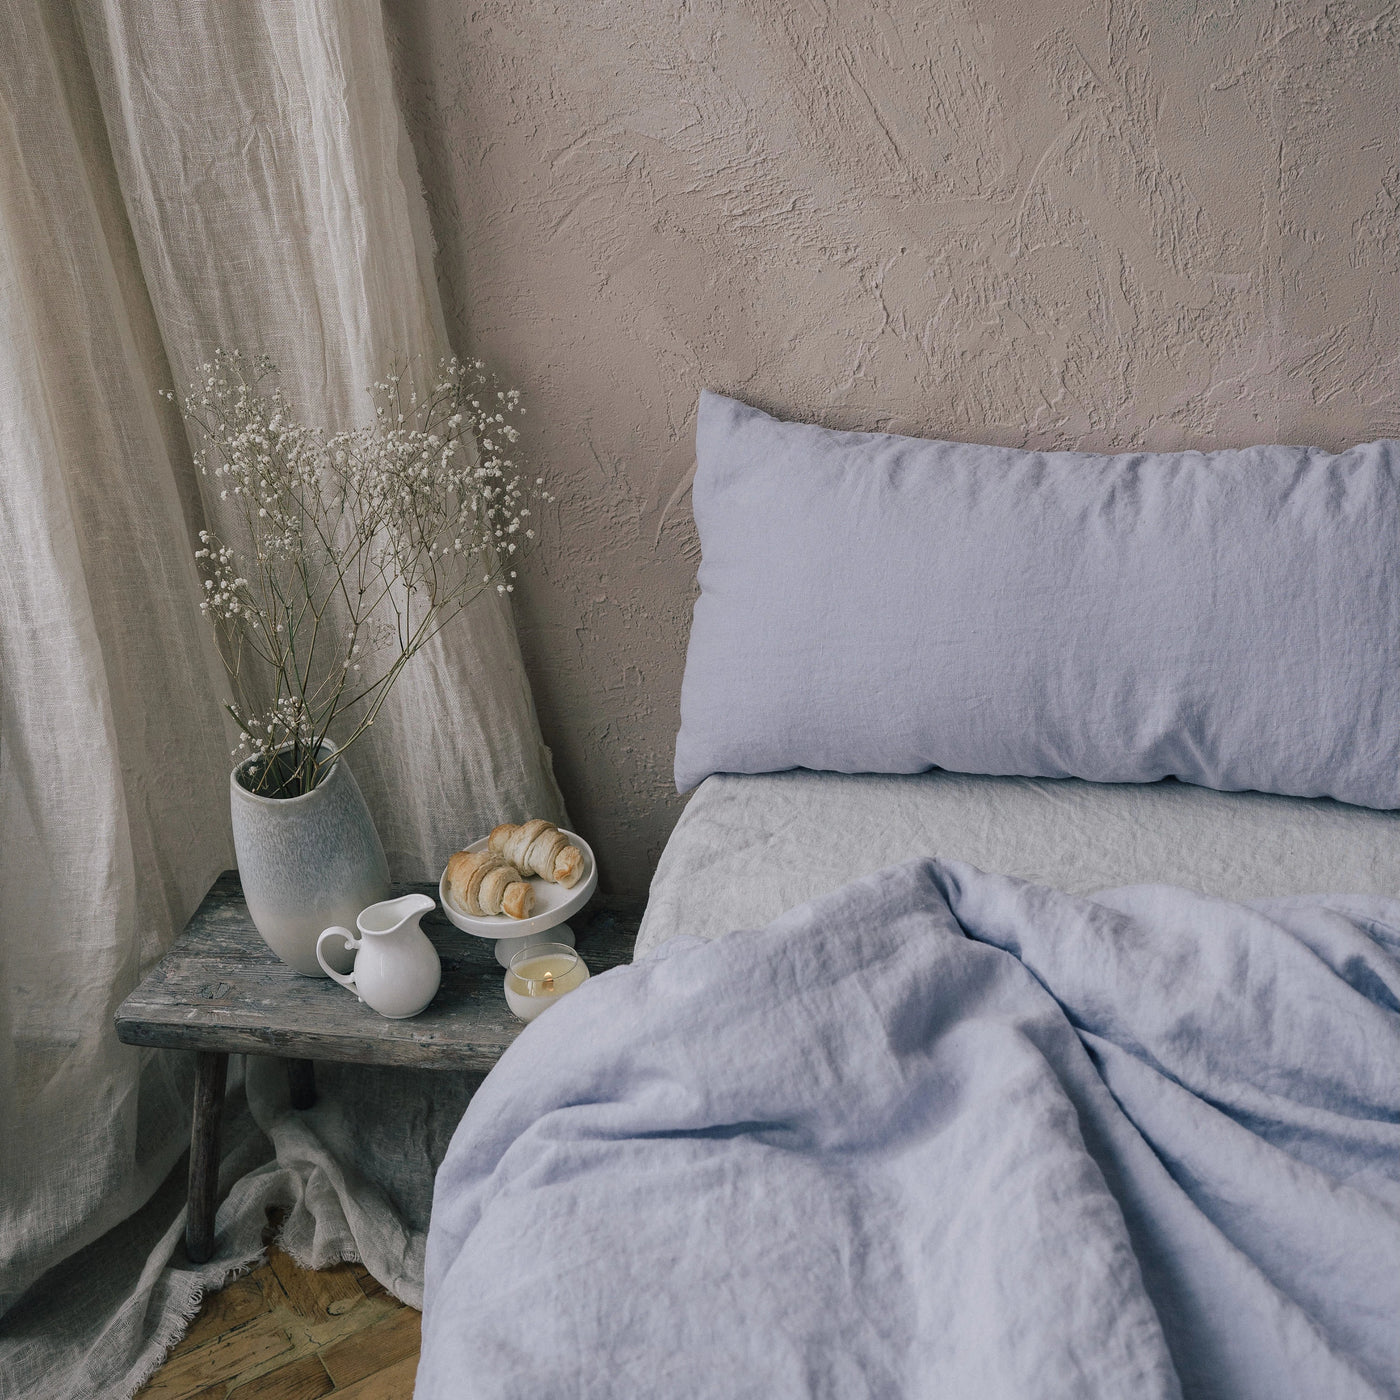 Buy now Eco-Friendly Linen Duvet Cover in Lavender 5